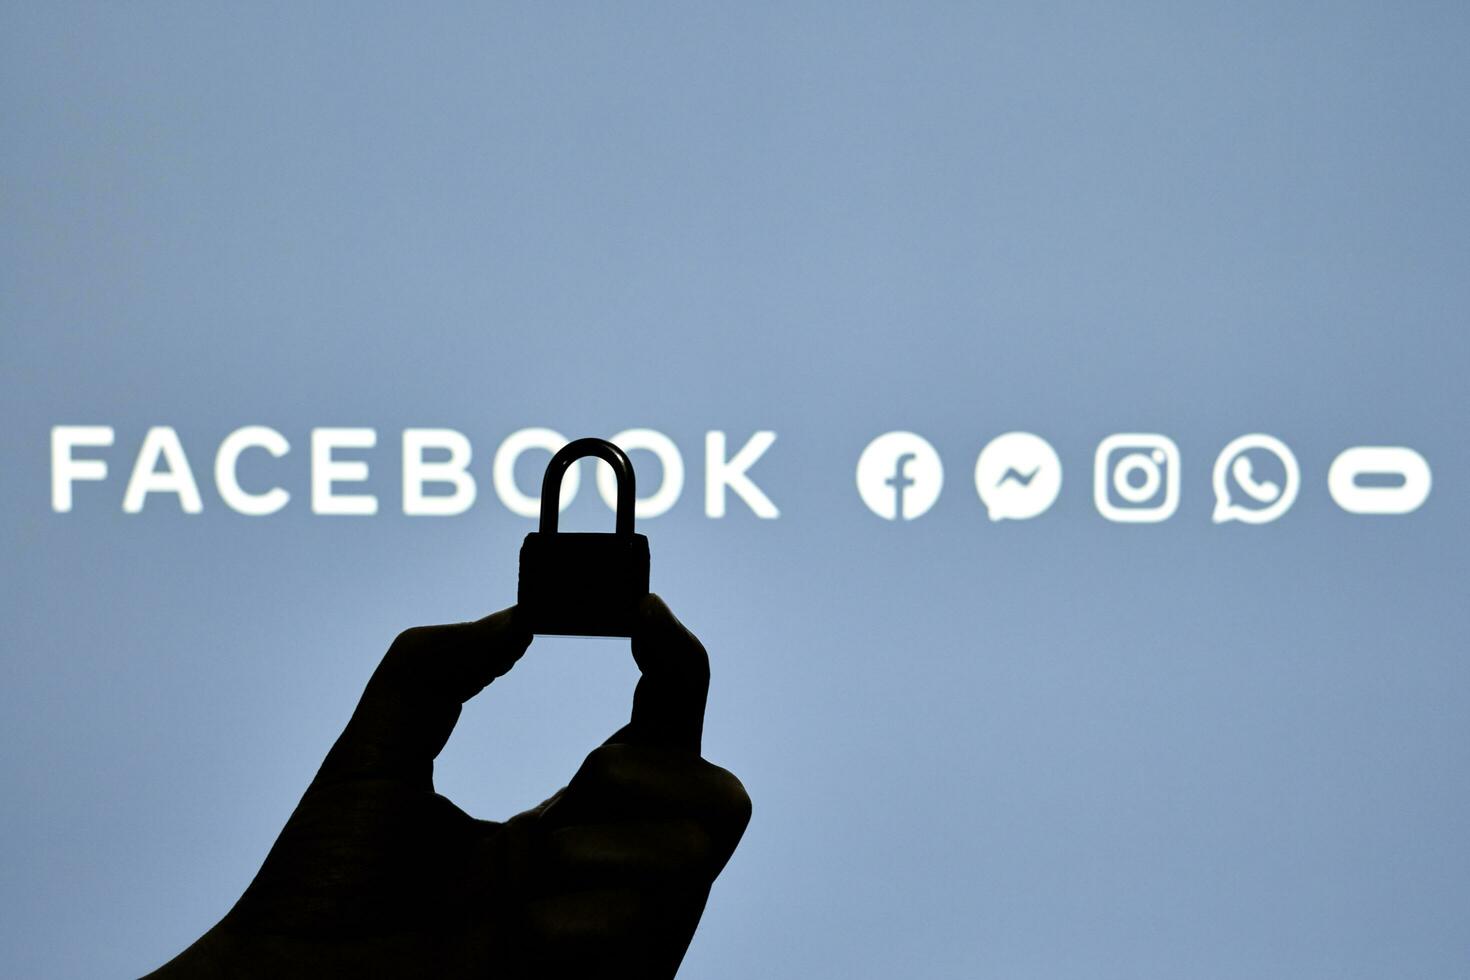 Facebook block, restriction or censorship photo